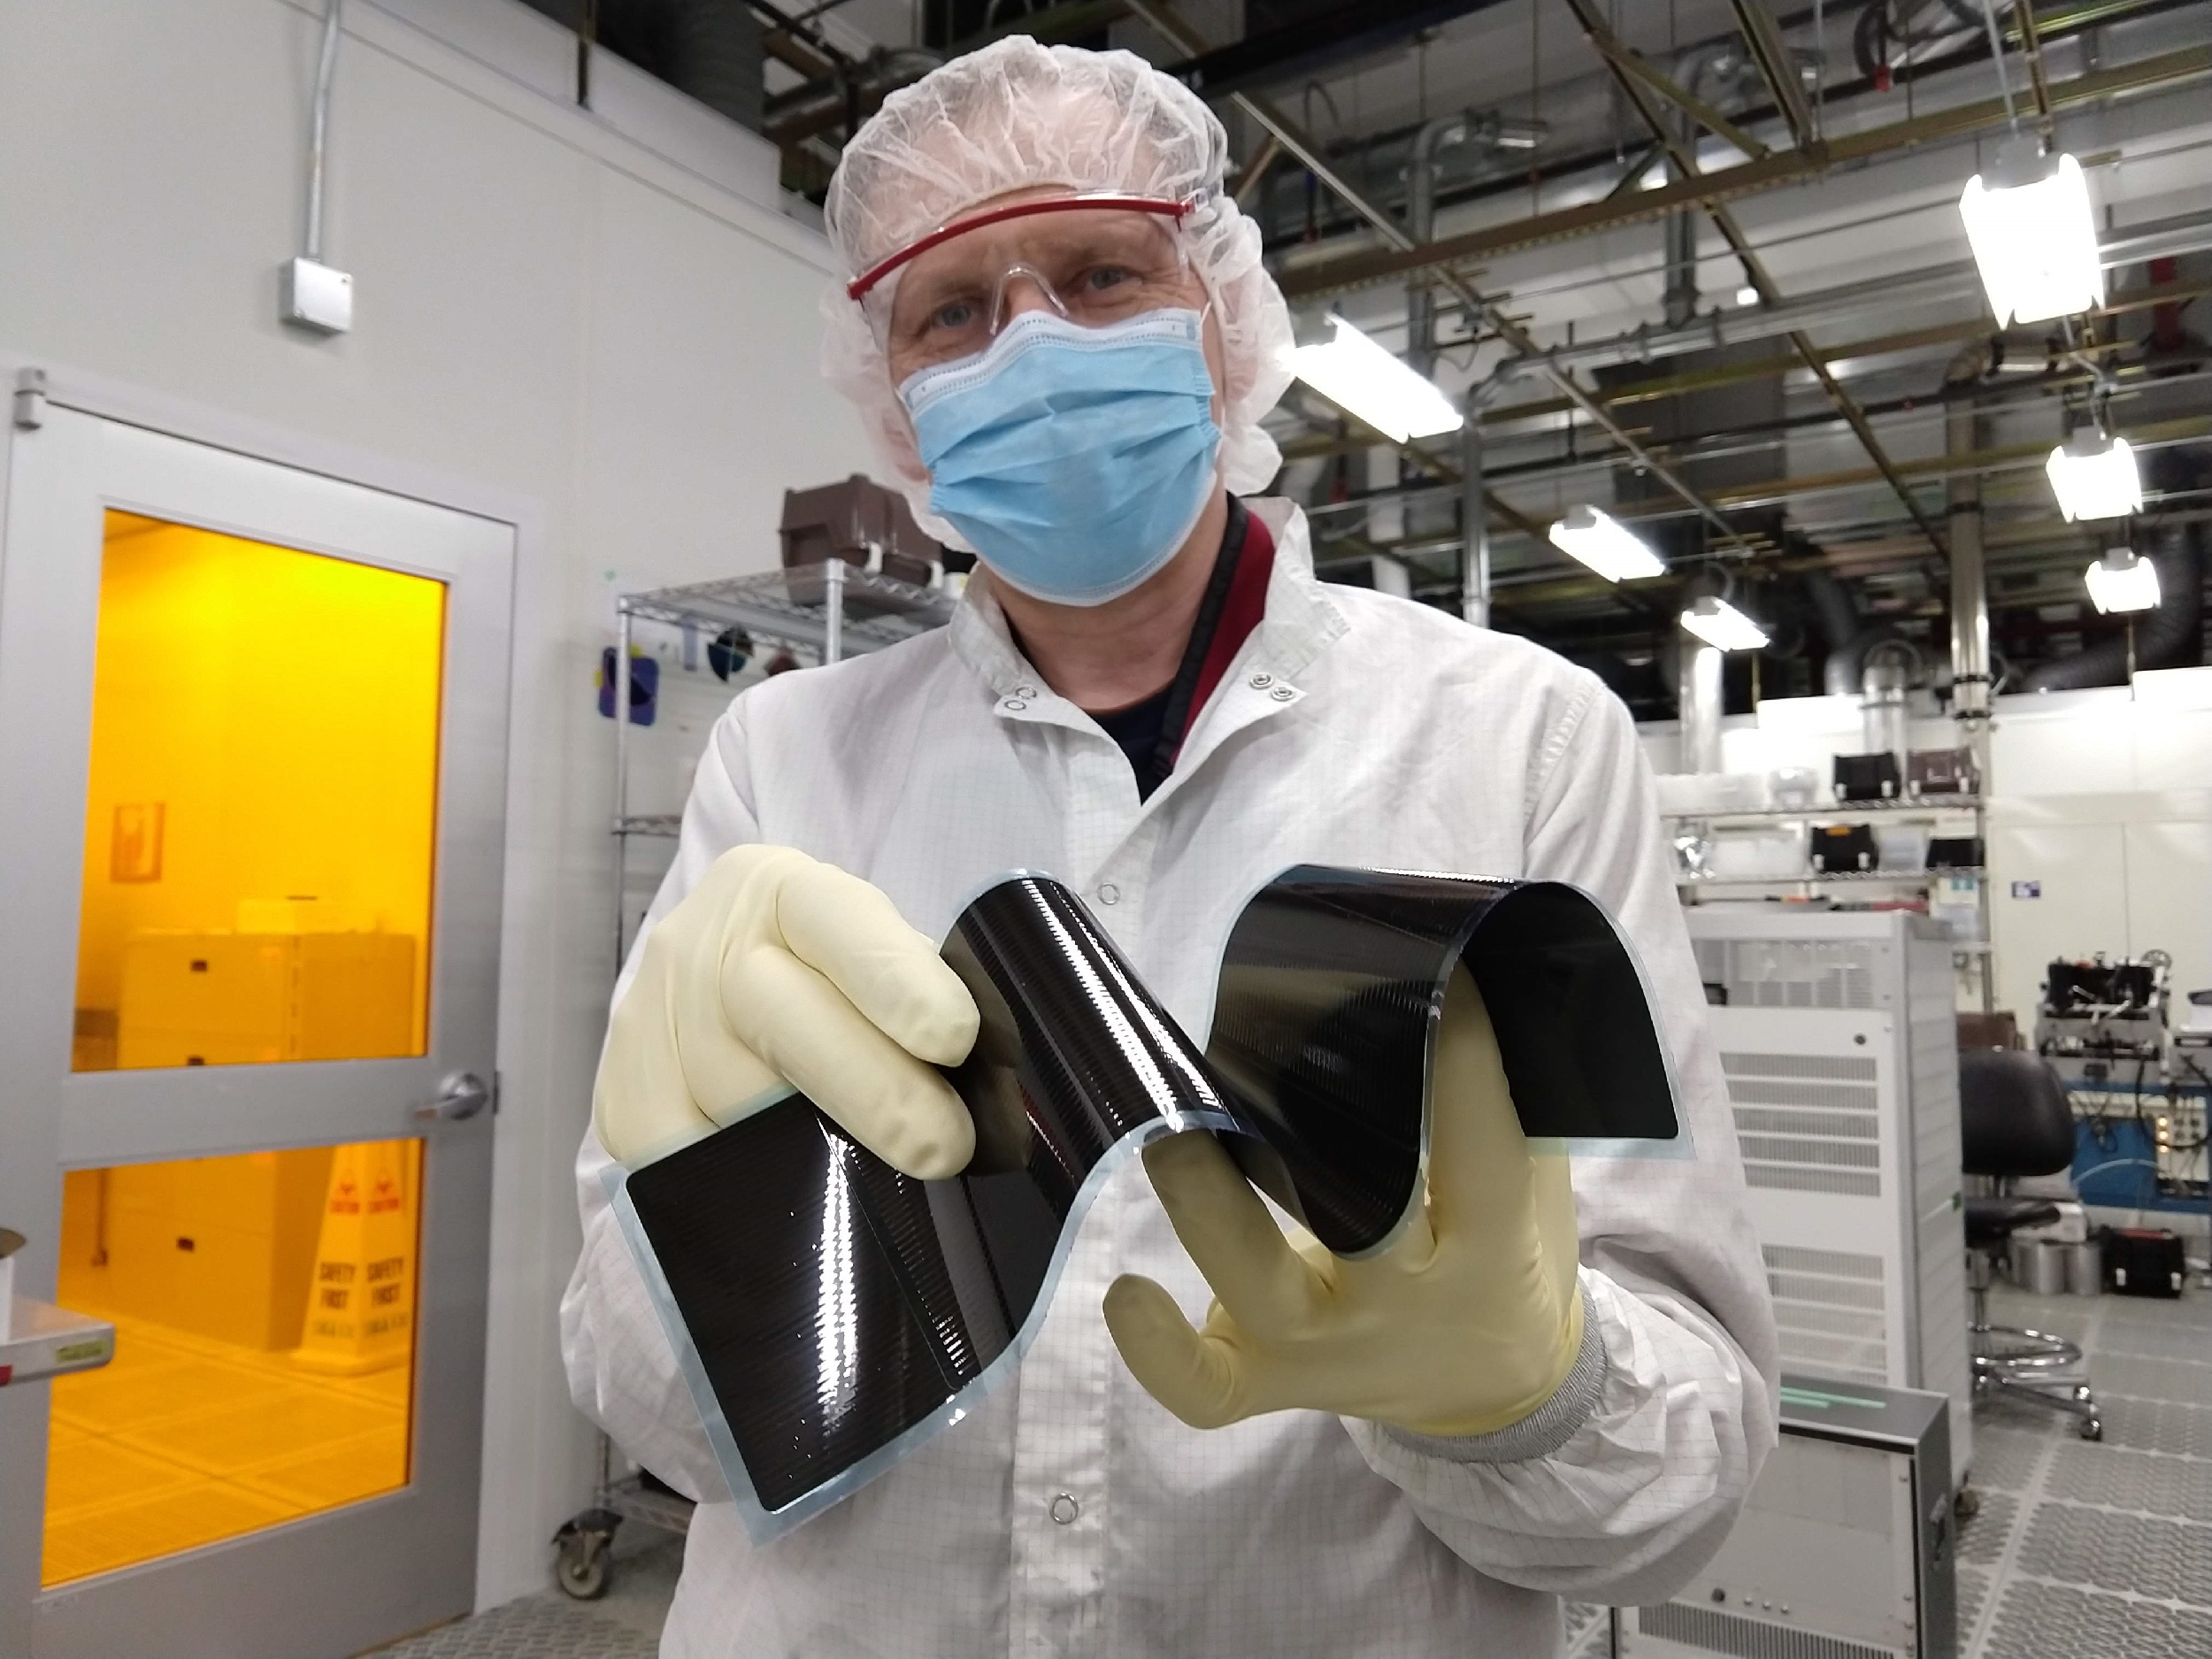 A lab technician shows the flexibility of a Regher "solar blanket."